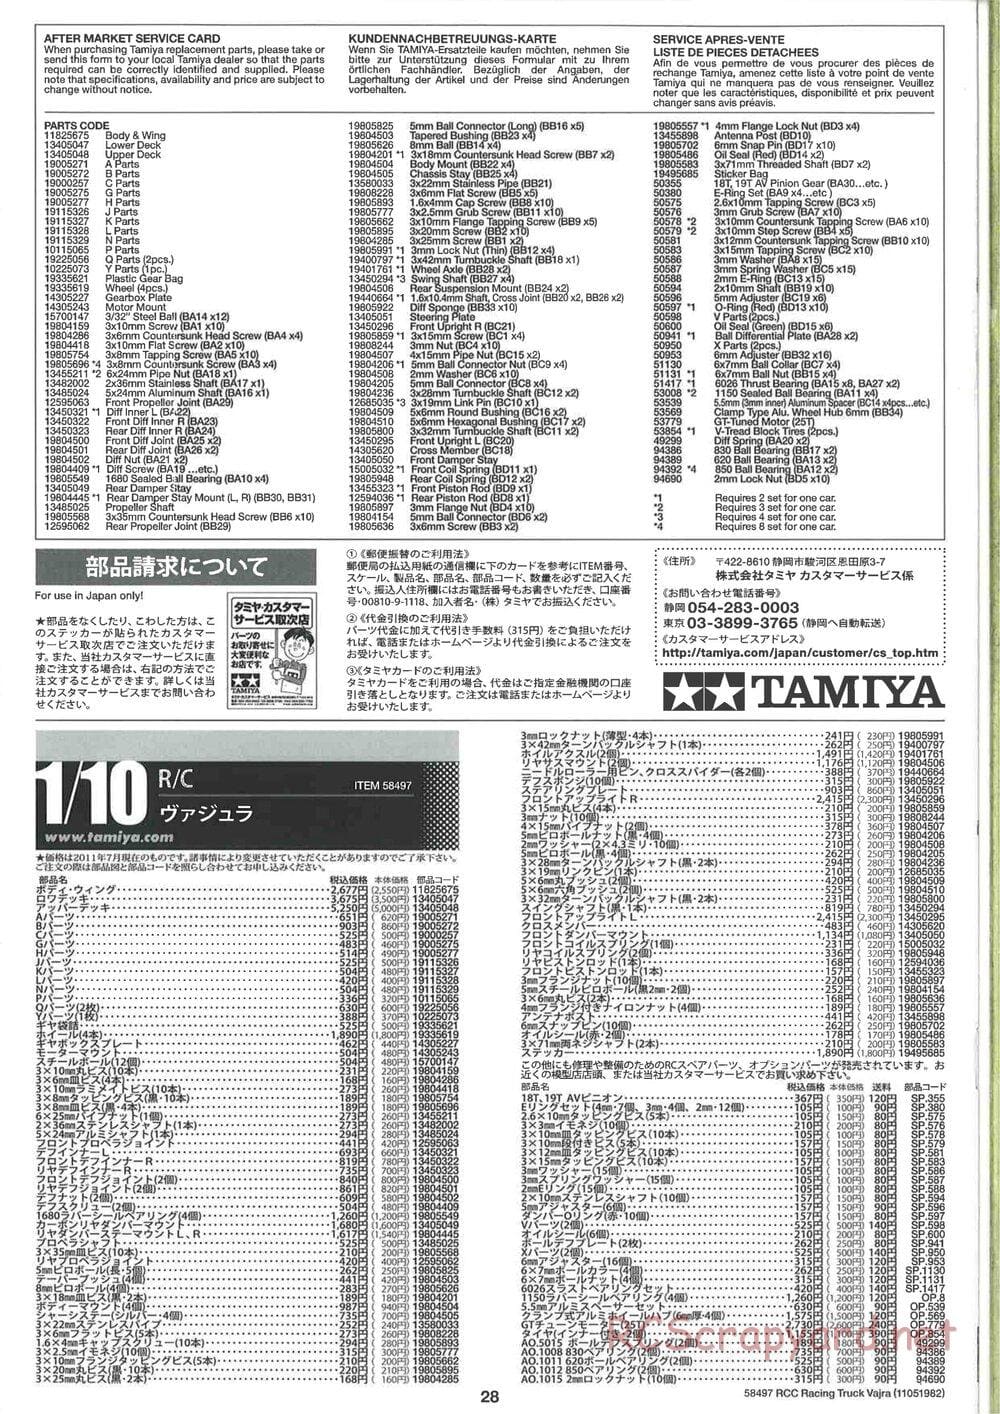 Tamiya - Vajra - AV Chassis - Manual - Page 28